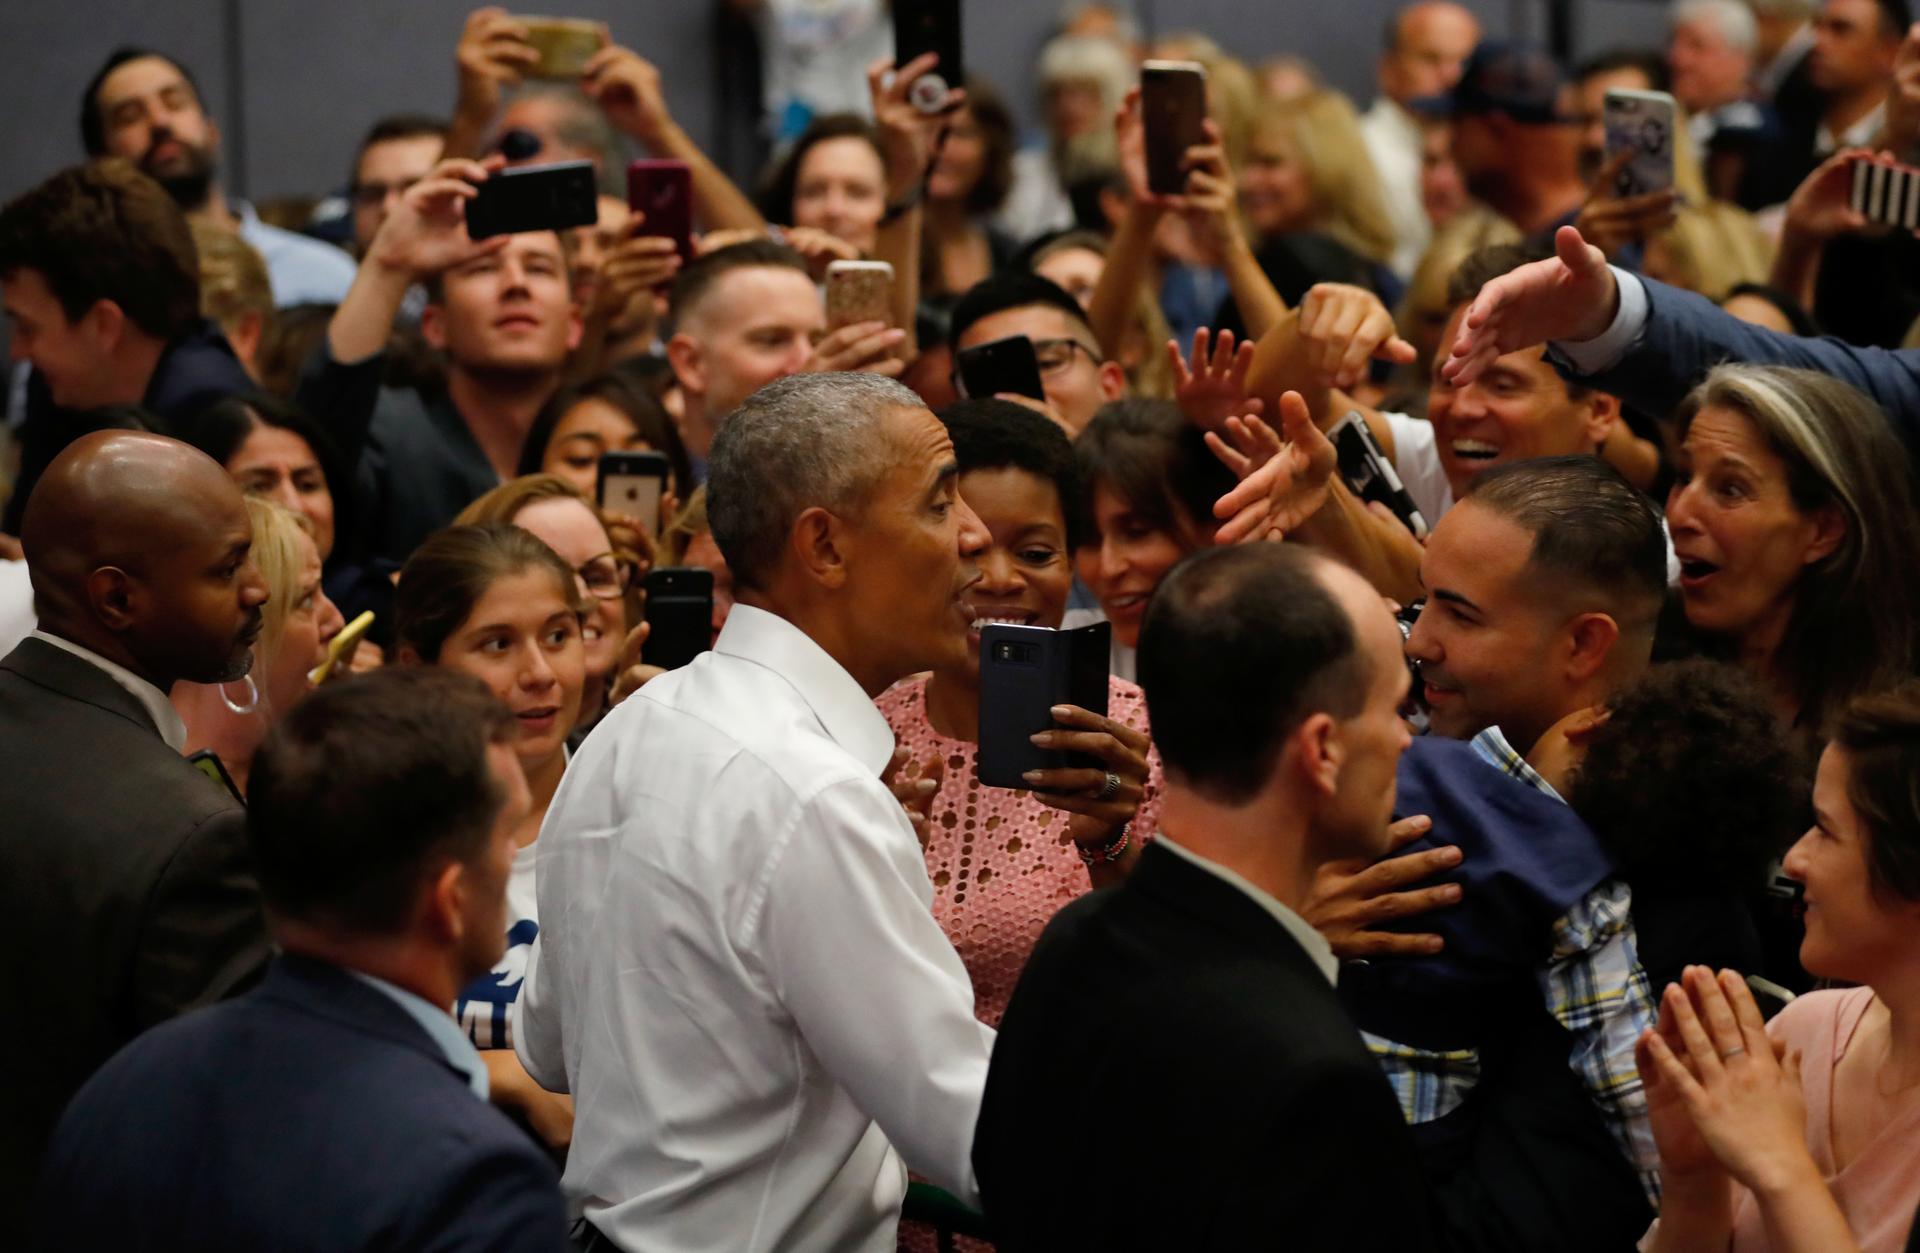 A large group of people surround former President Barack Obama